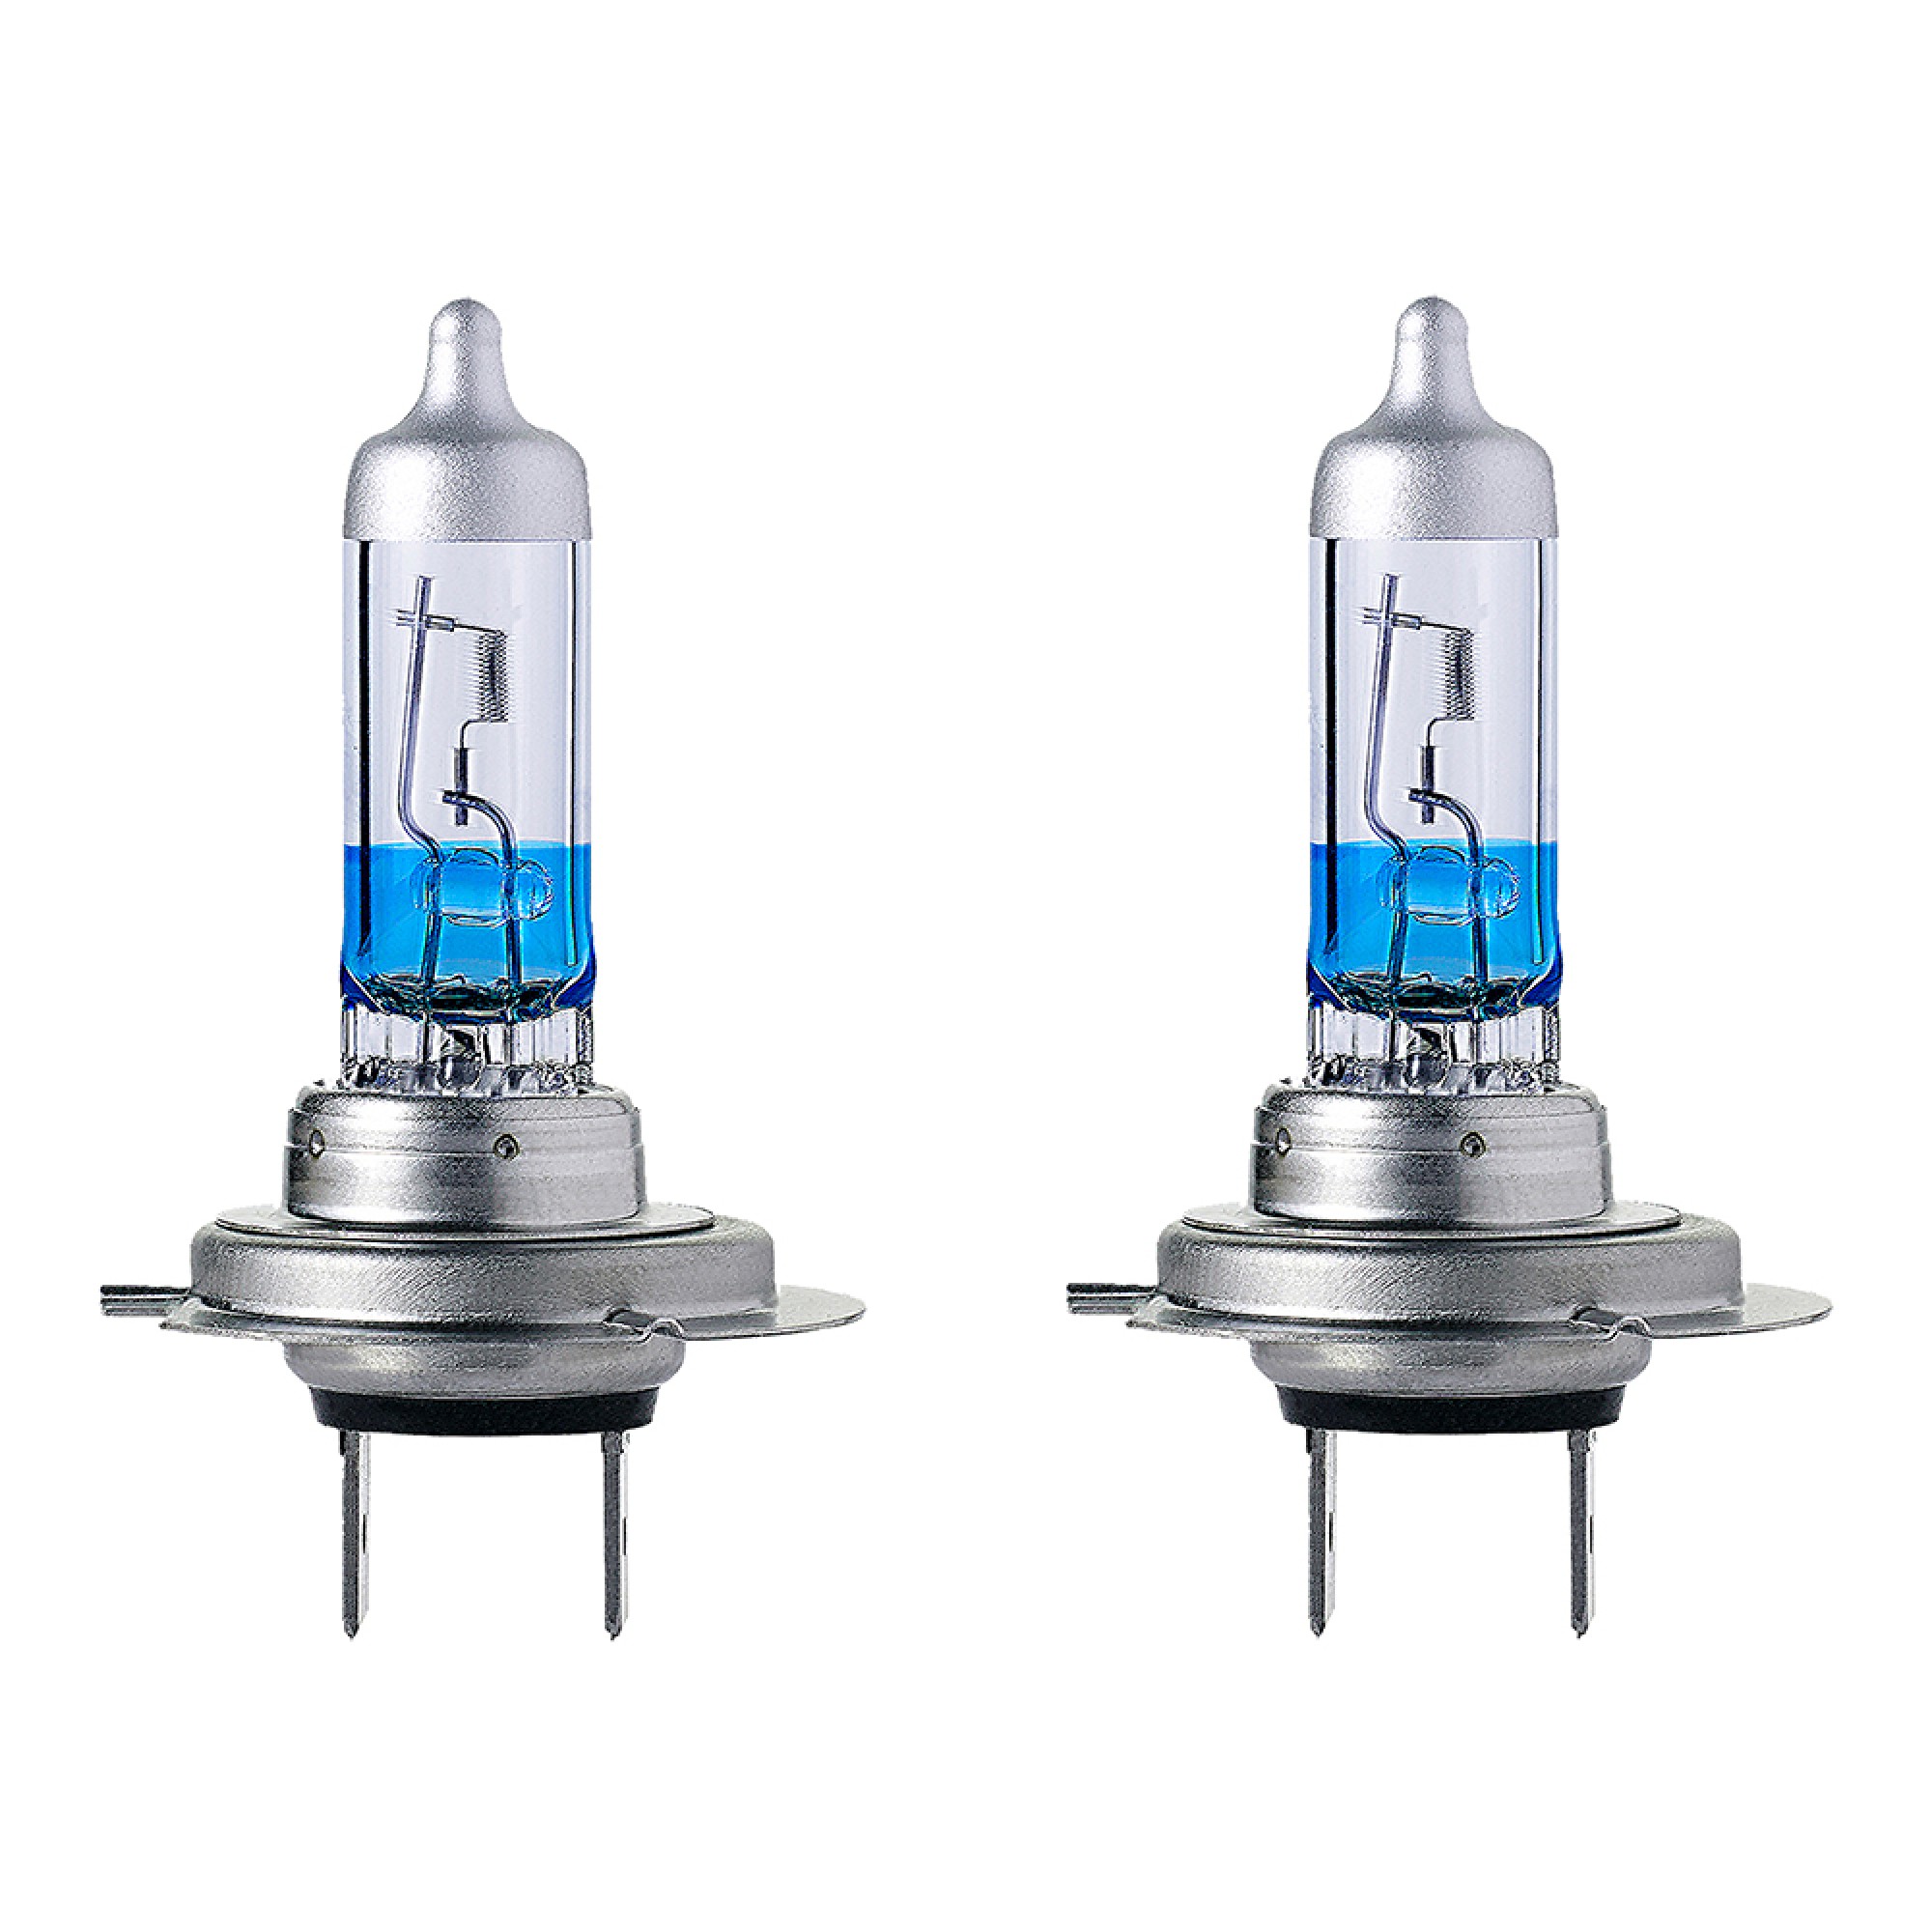 DA5024-150 - Xenon +150% H7 Halogen H/Lamp Bulb (Pair) - Ring